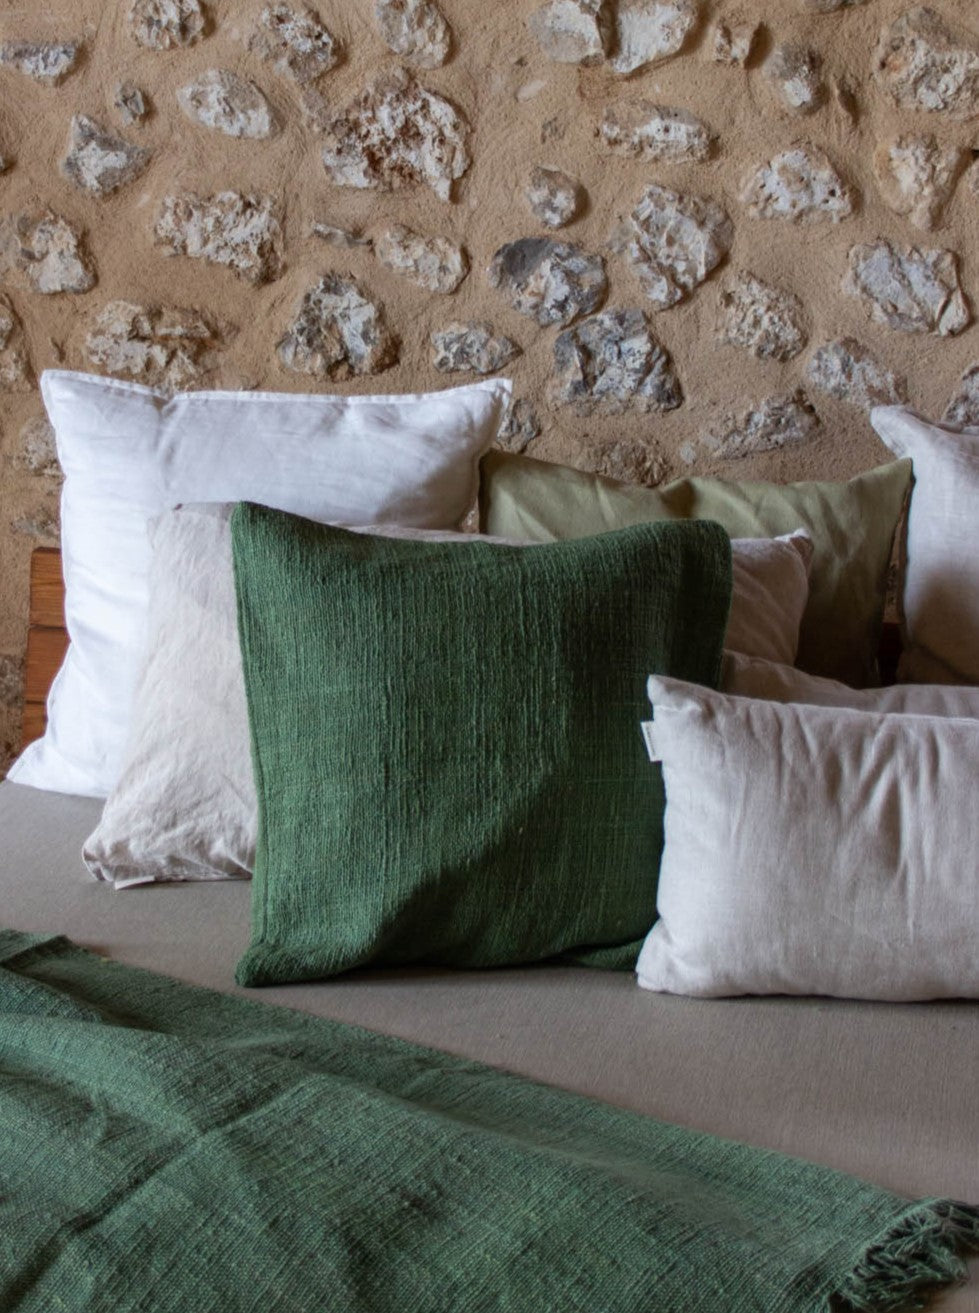 100% recycled green cotton cushion sheath